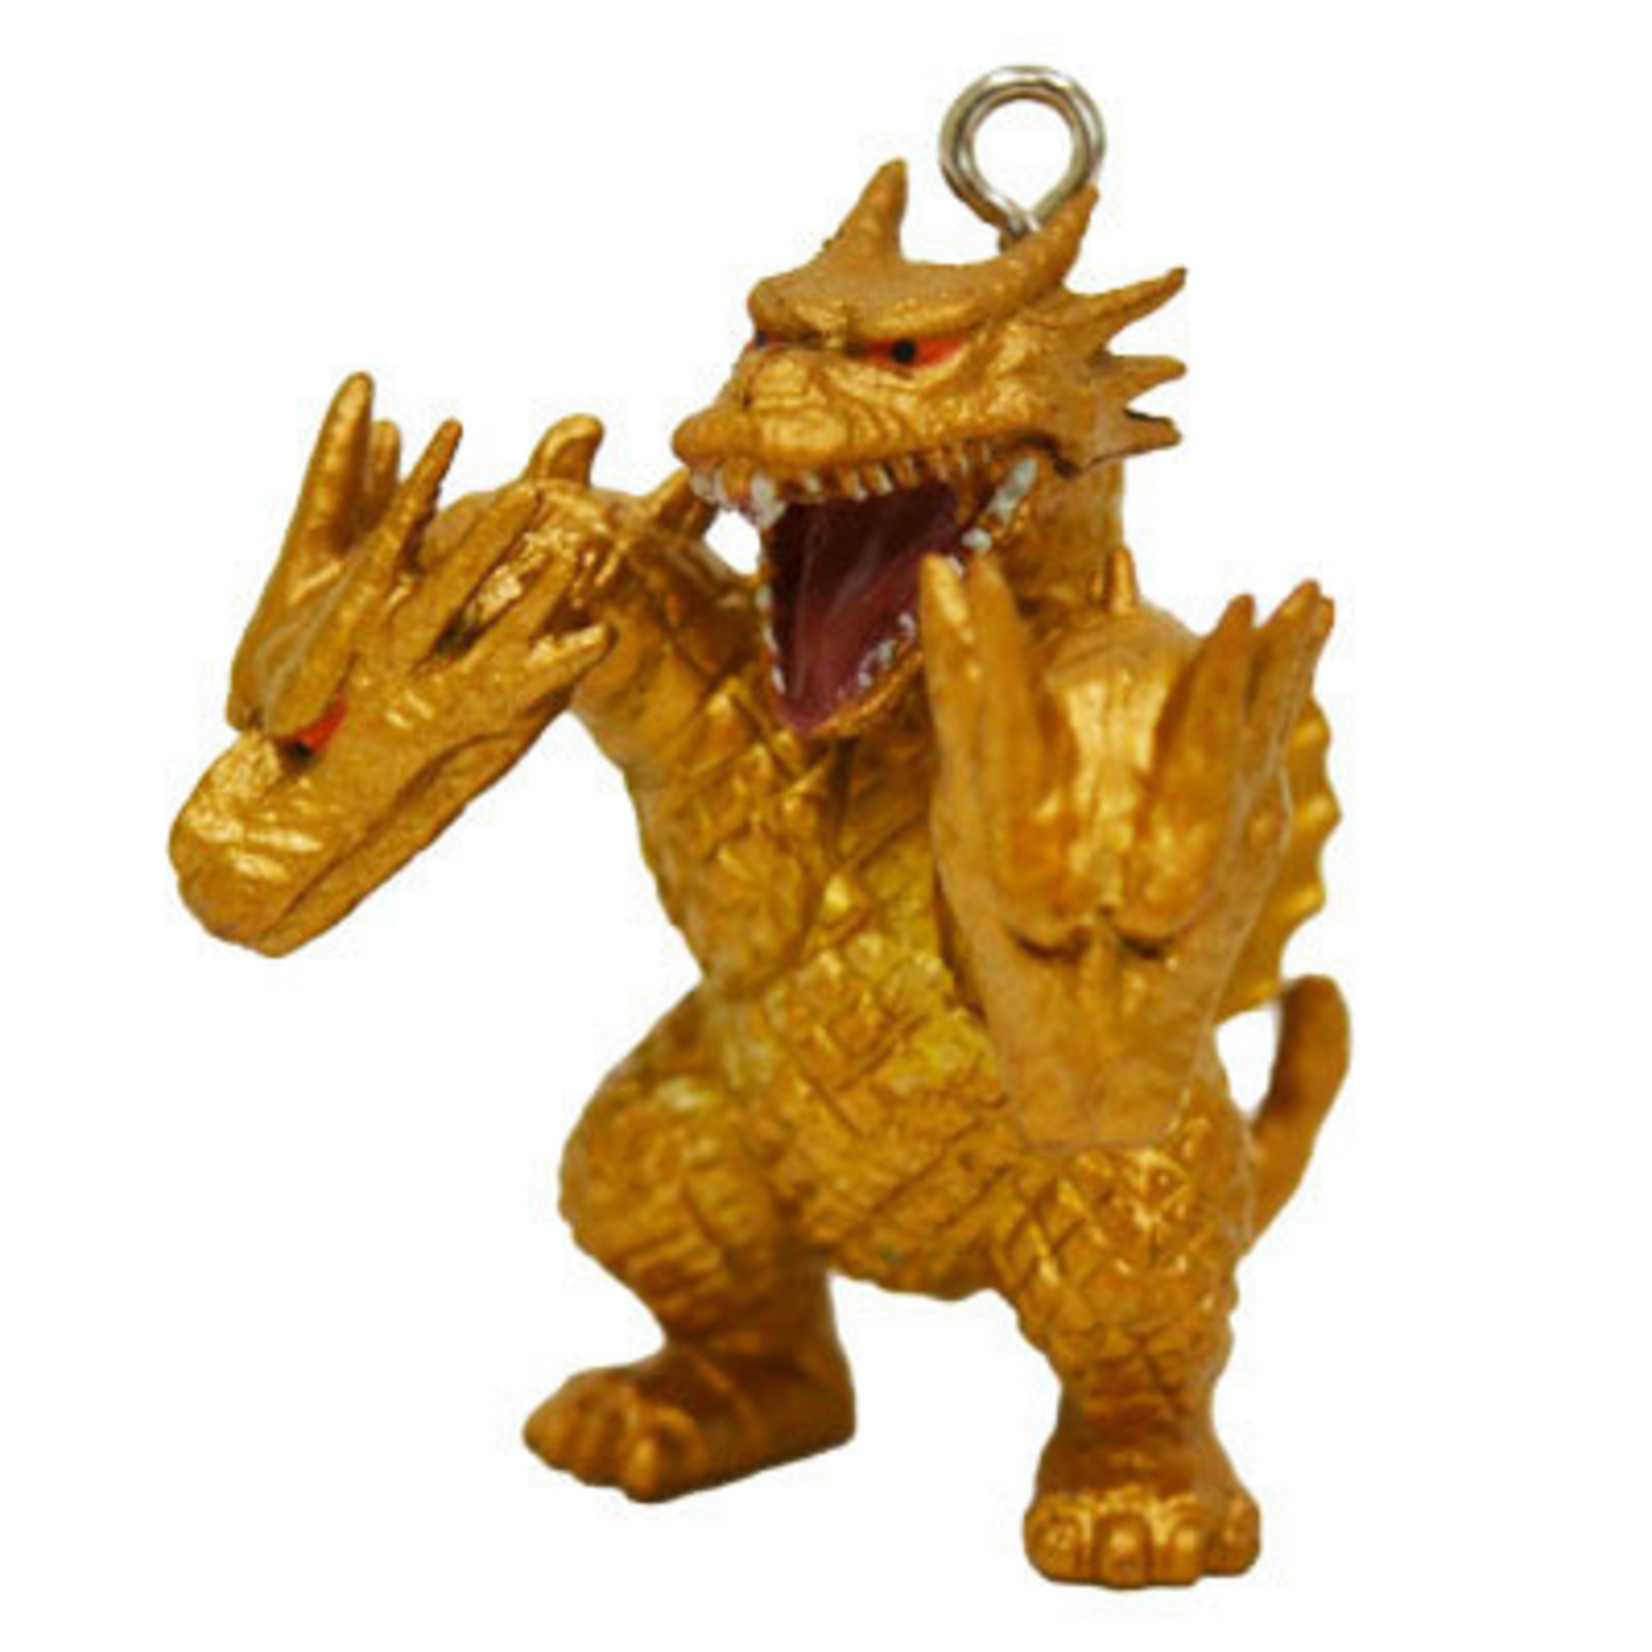 Toho Godzilla Series Keyring - Gold King Ghidorah